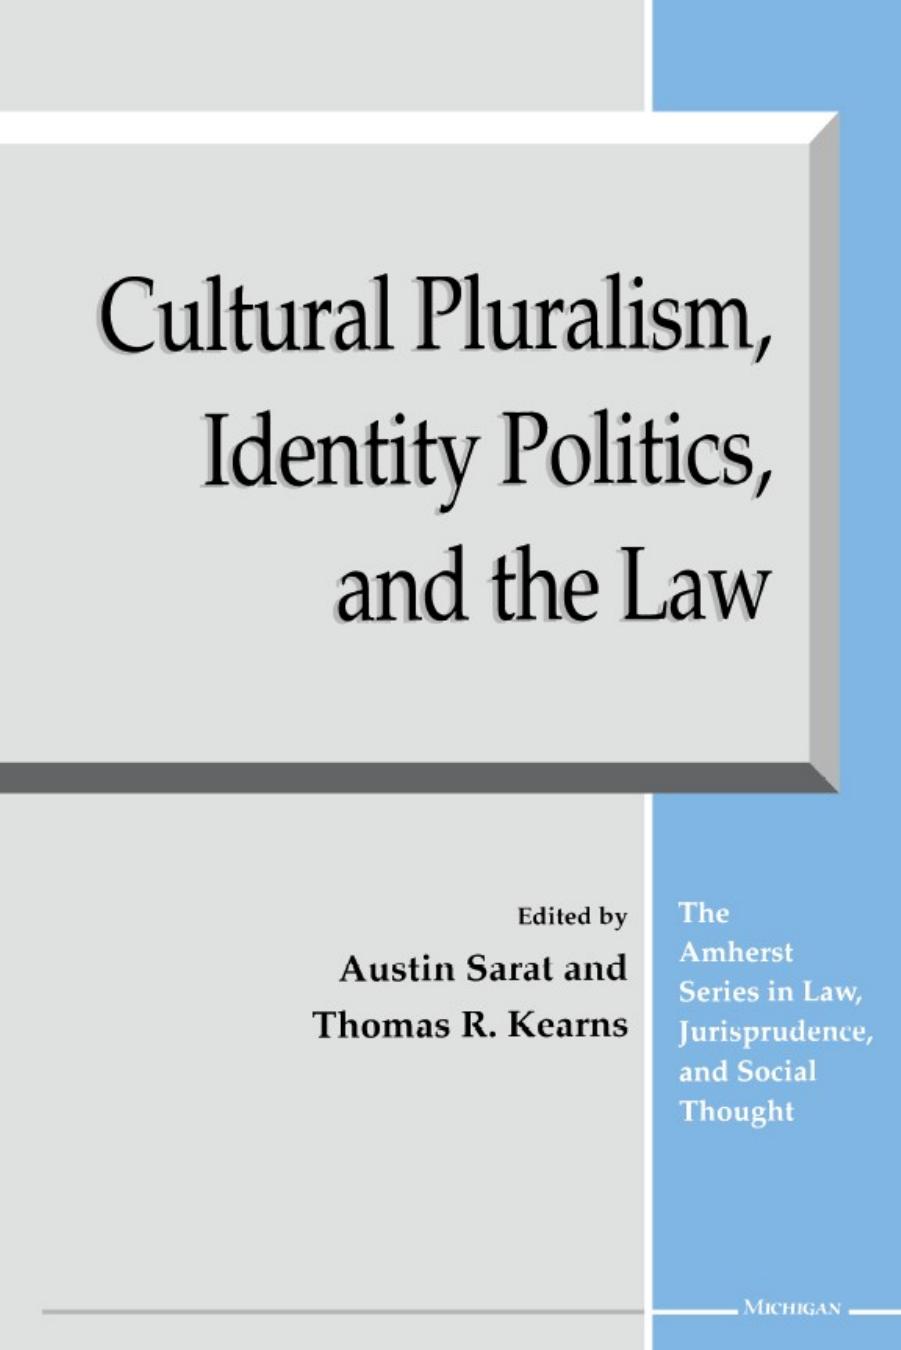 Cultural Pluralism, Identity Politics, and the Law by Austin Sarat; Thomas R. Kearns